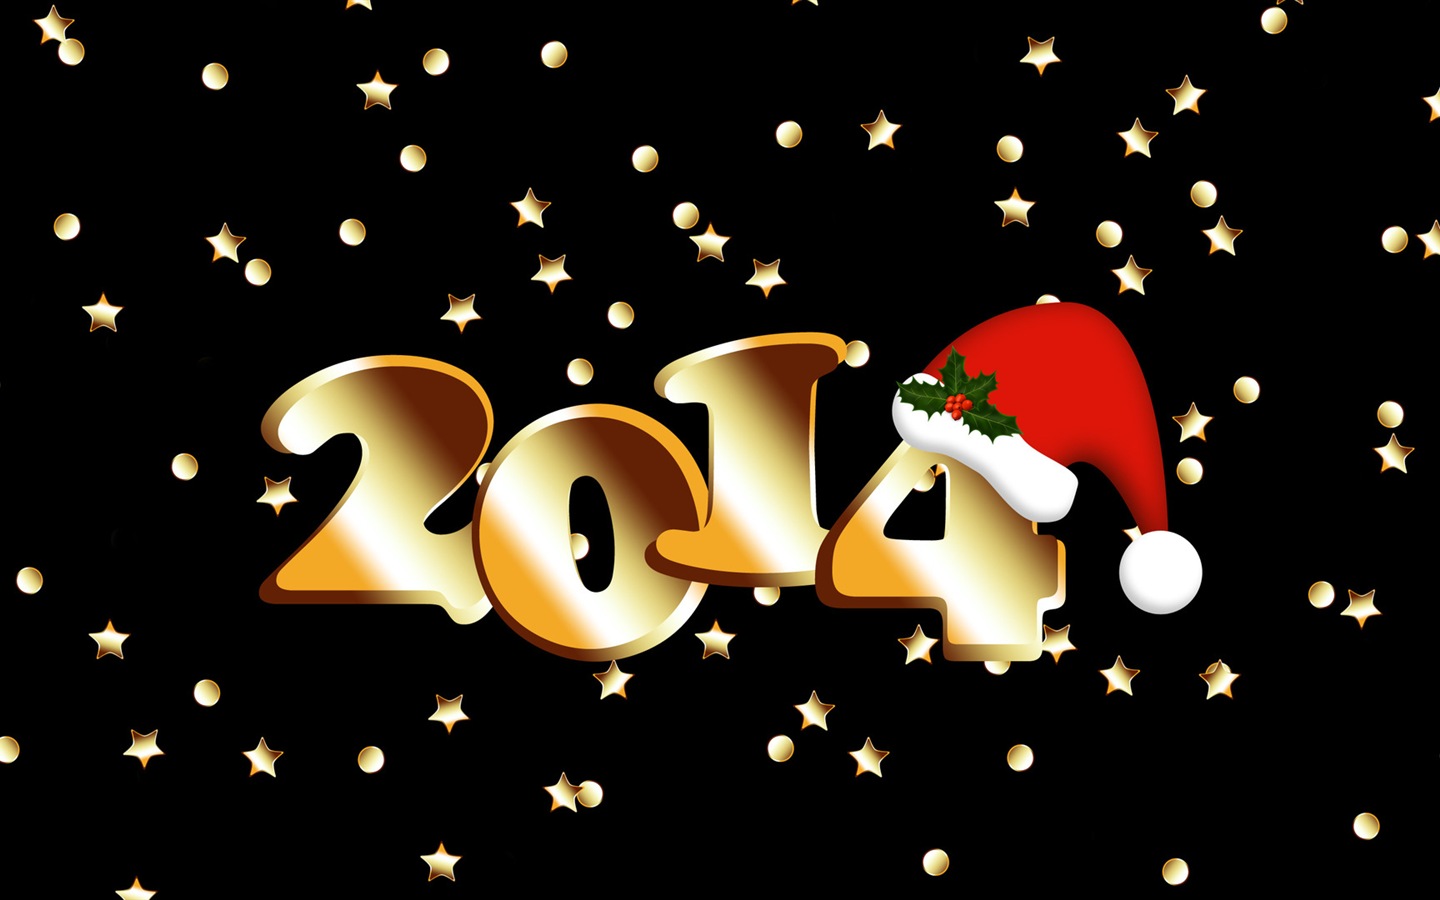 2014 New Year Theme HD Fonds d'écran (1) #15 - 1440x900